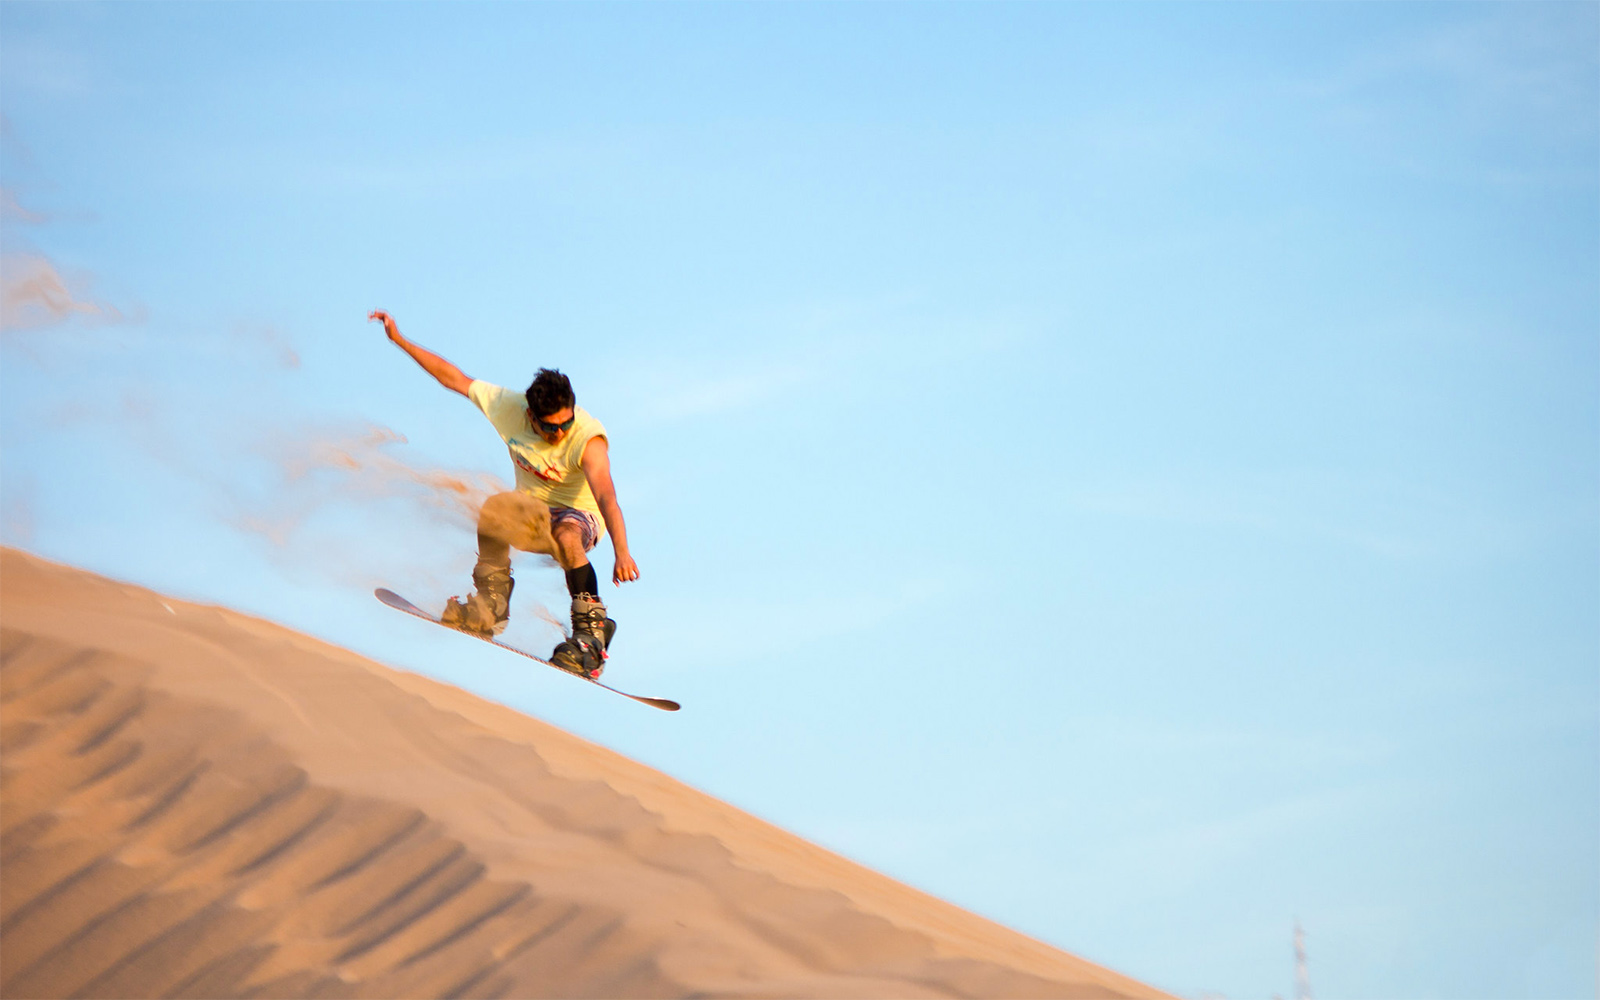 Sahara Desert Tour - Activities - Sandboarding - Sand Board